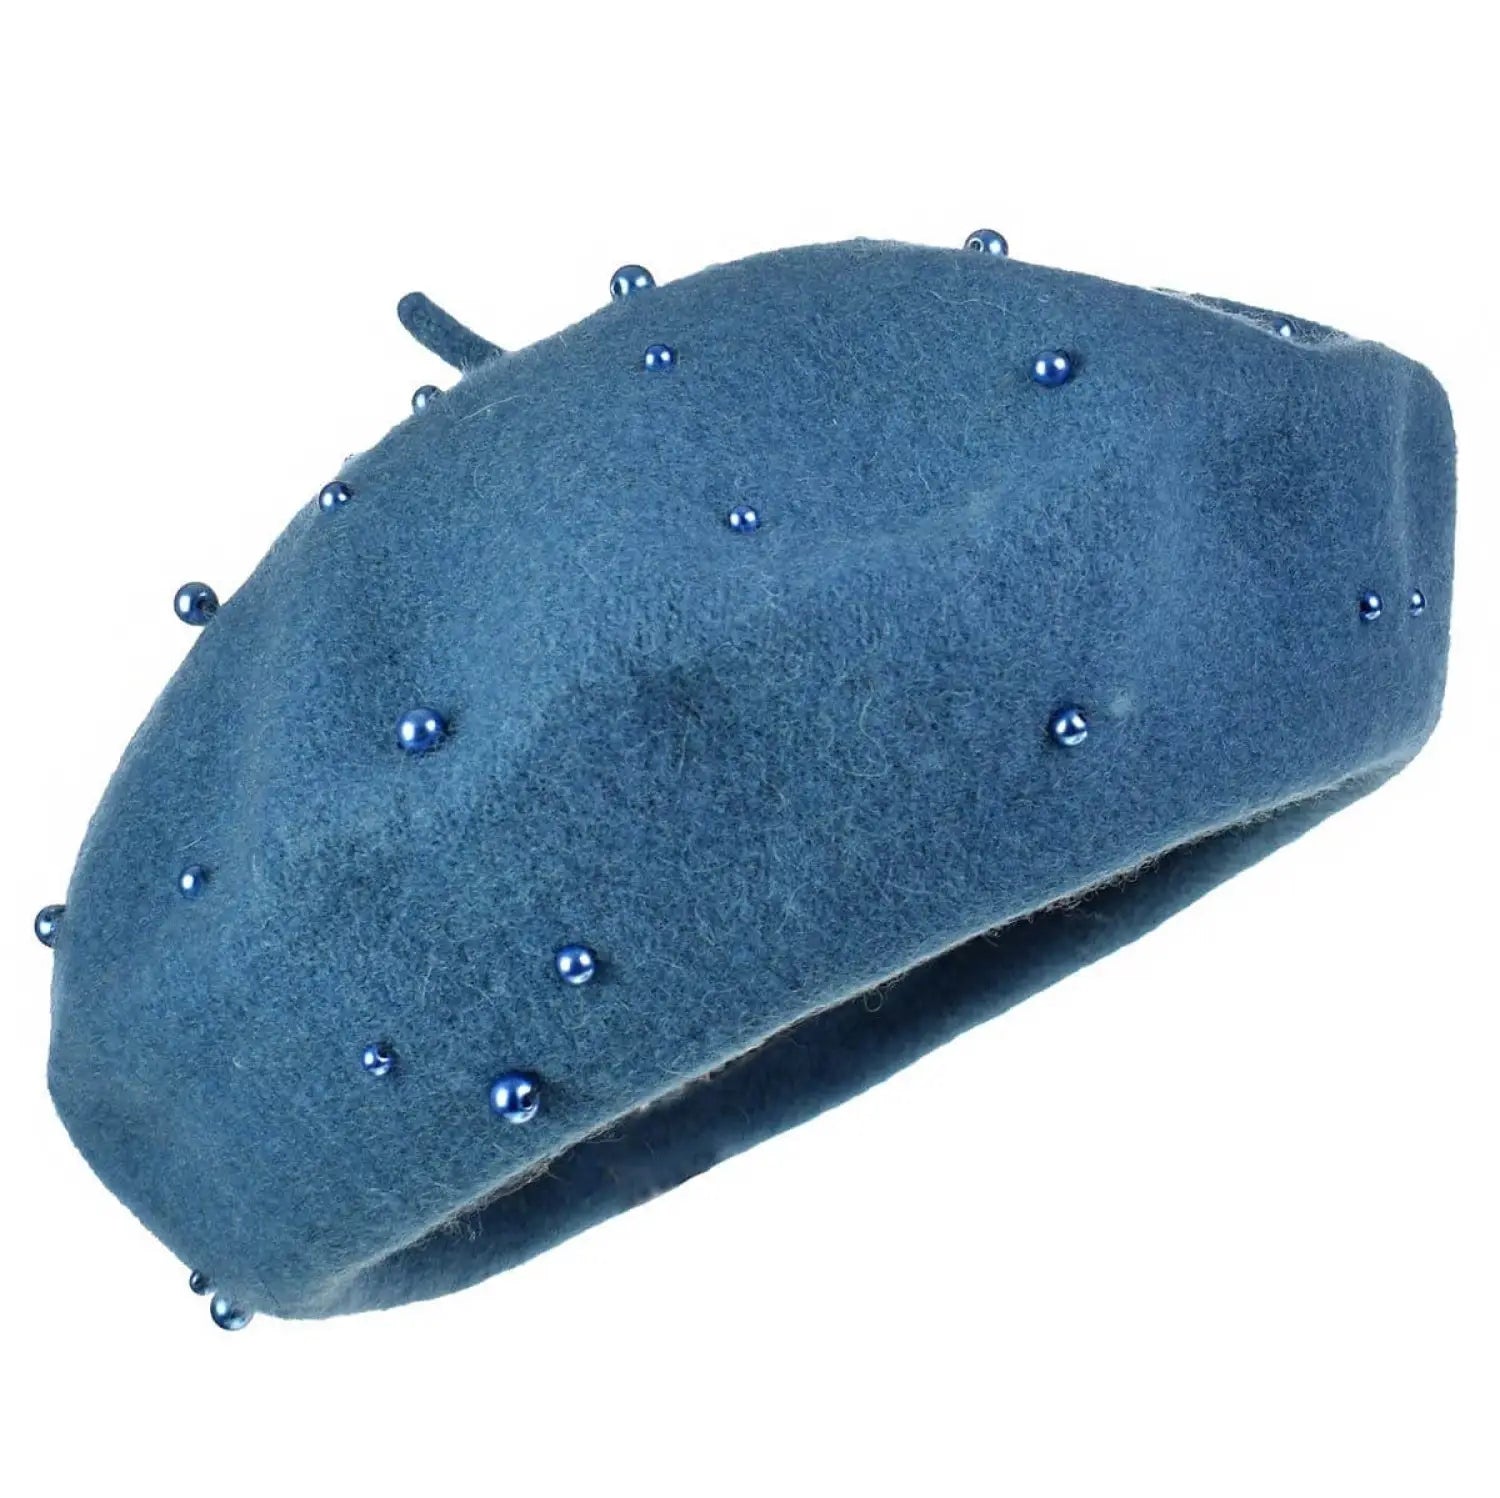 Blue beret with imitation pearl embellishment.